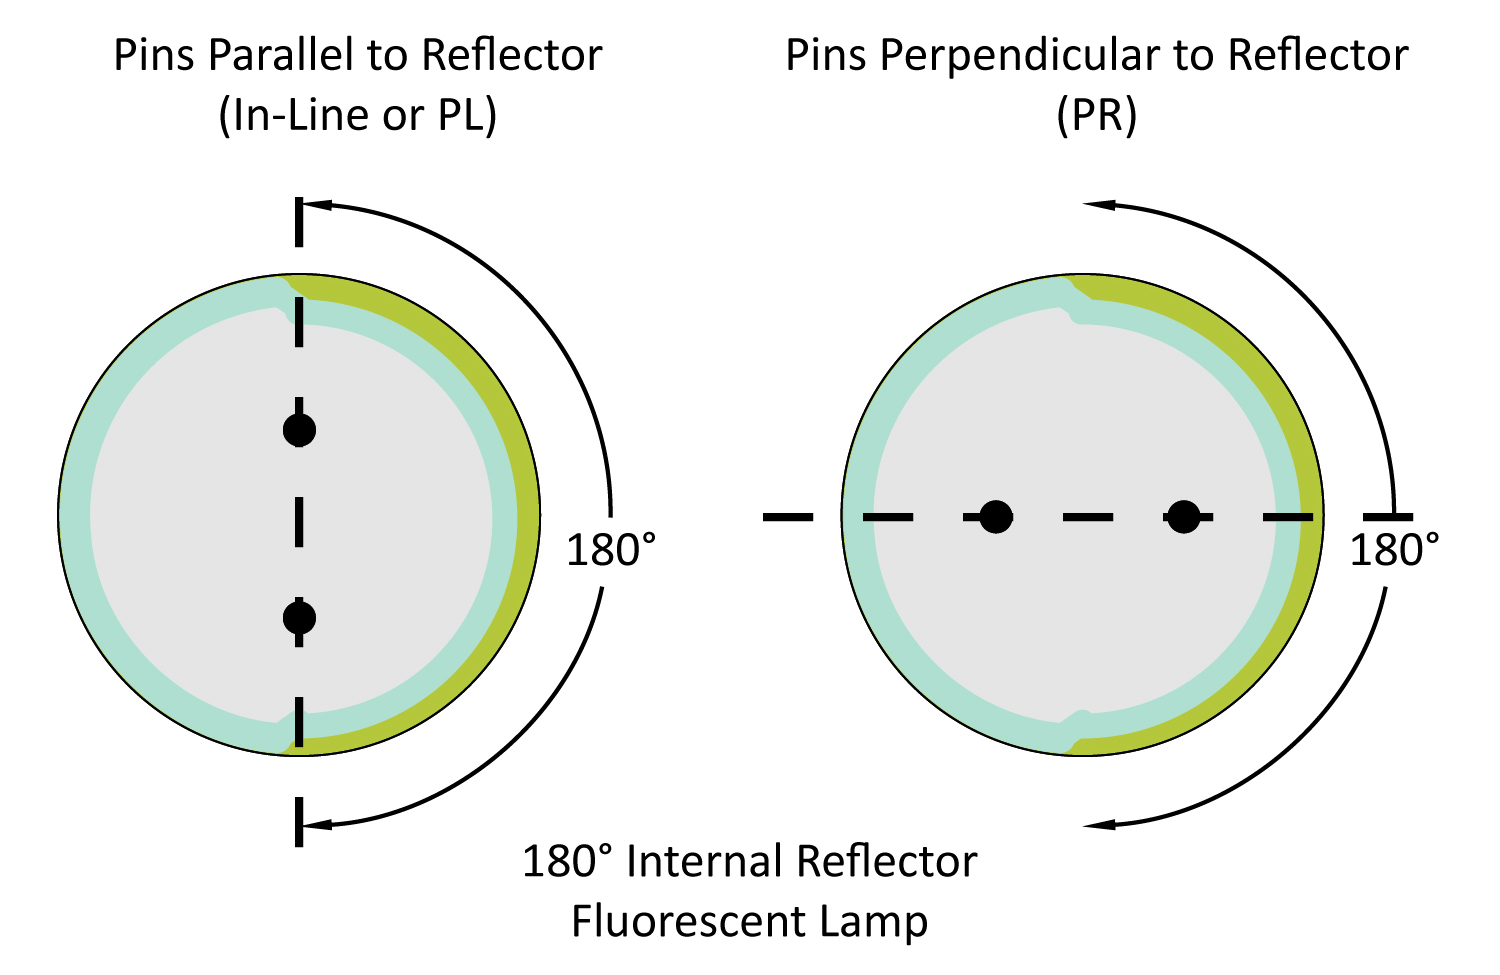 Reflector Pin Orientations I (PL) or PR